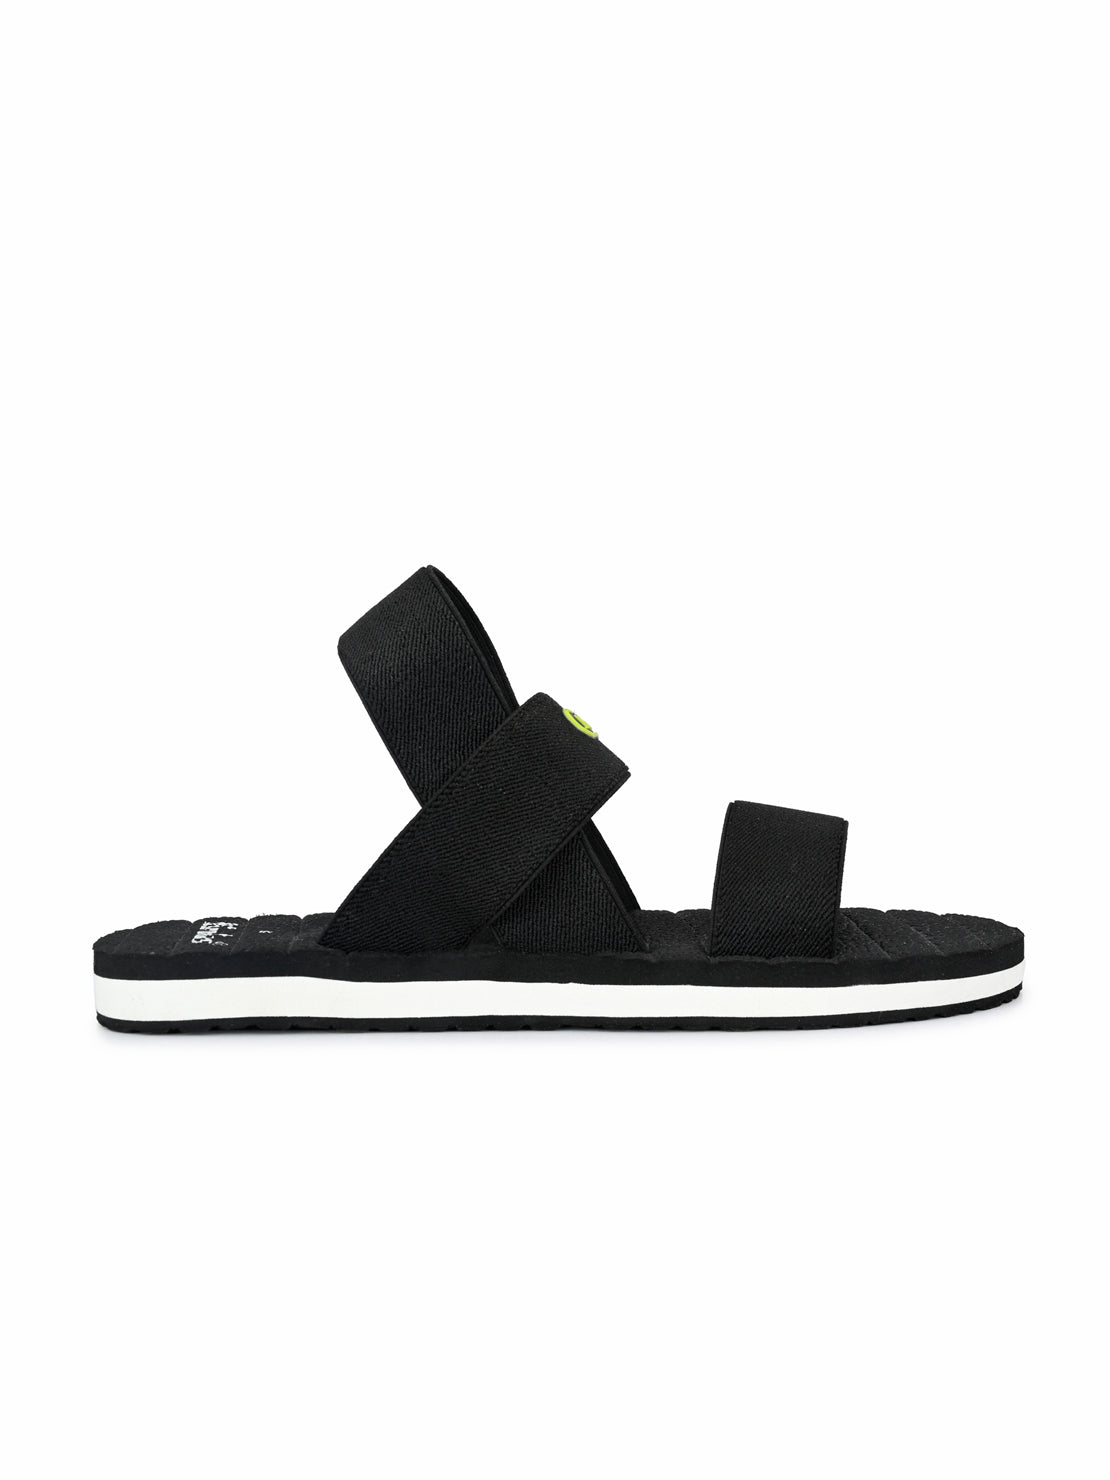 Hirolas® Men's Trendy Ealsticated Black Comfortable Sandal (HROFF14BLK)